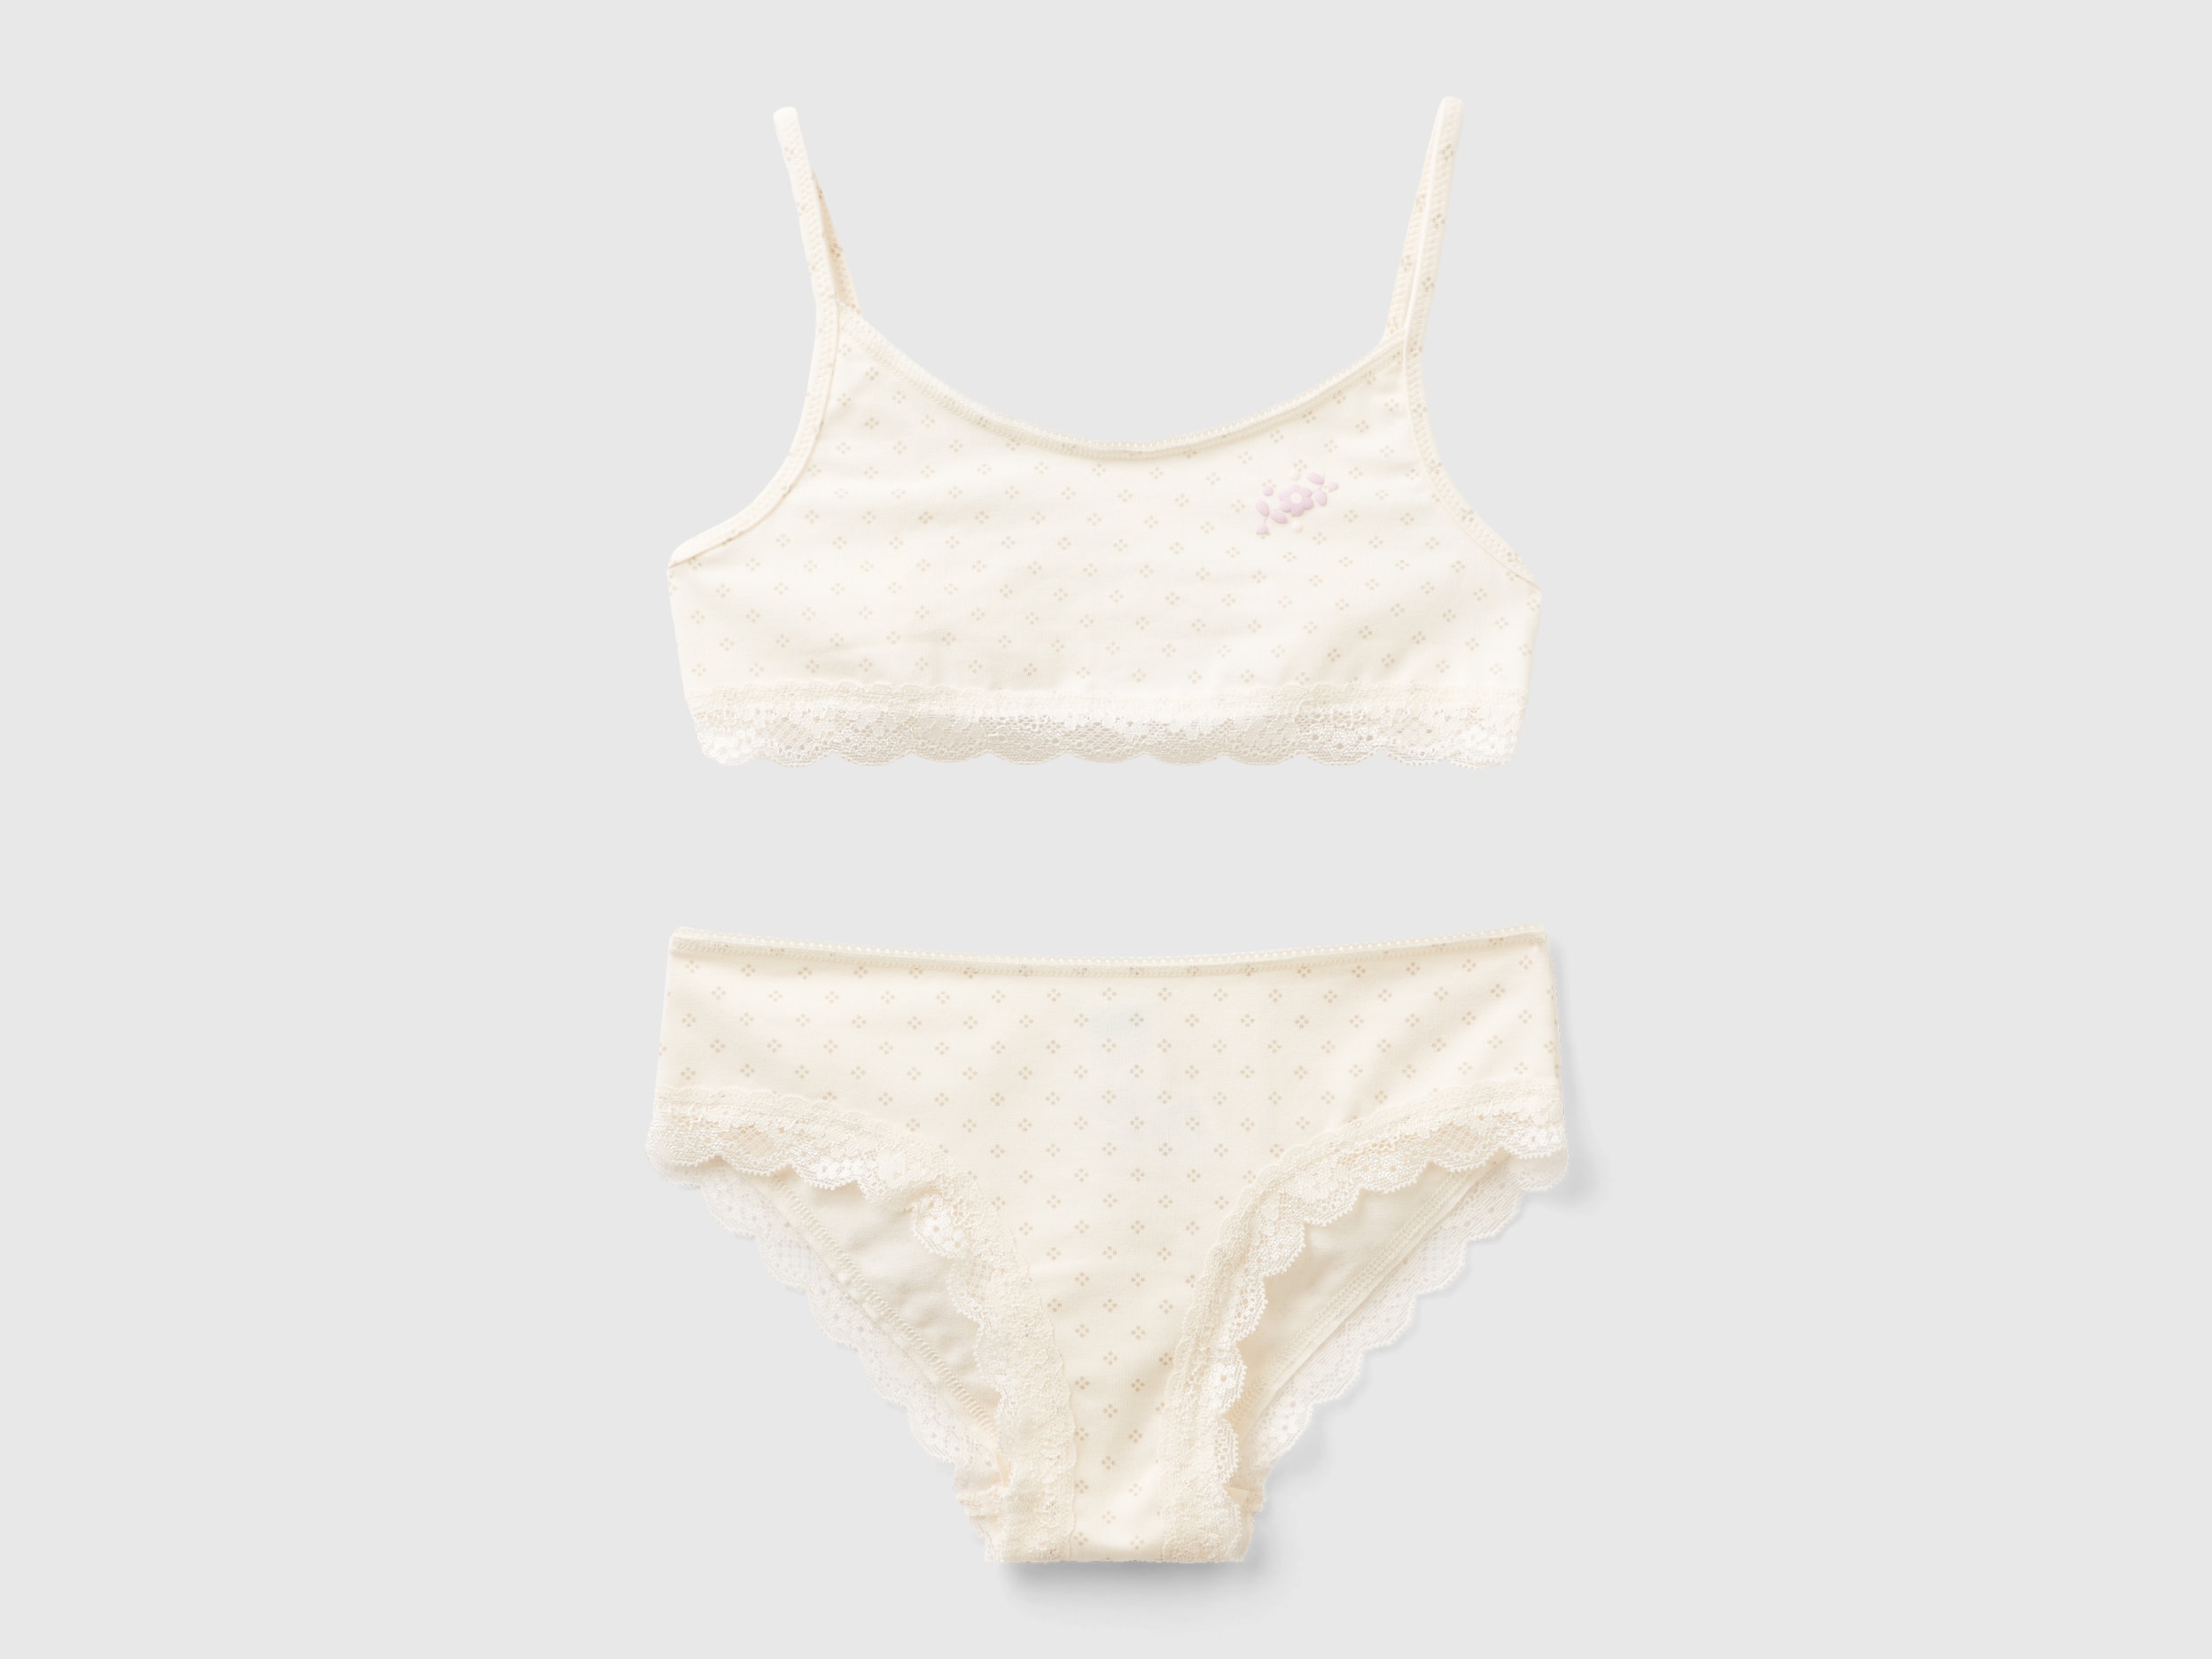 Benetton, Micro Pattern Top And Underwear Set, size S, Creamy White, Kids